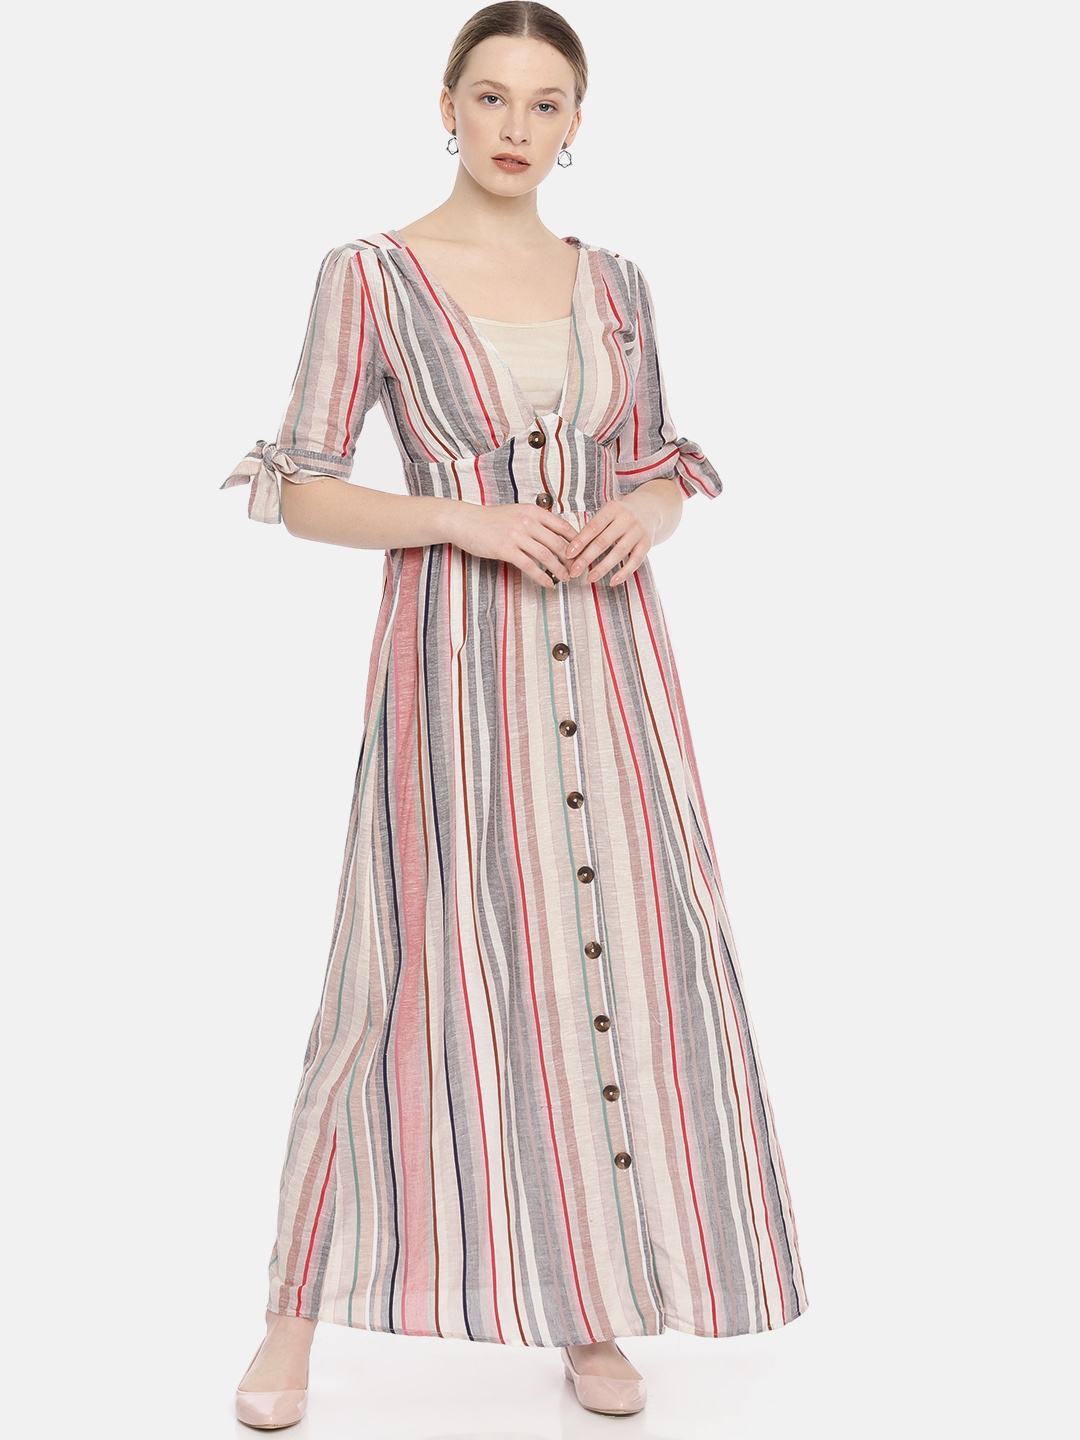 Vero Moda Long Dress Top Sellers, 55% OFF | espirituviajero.com